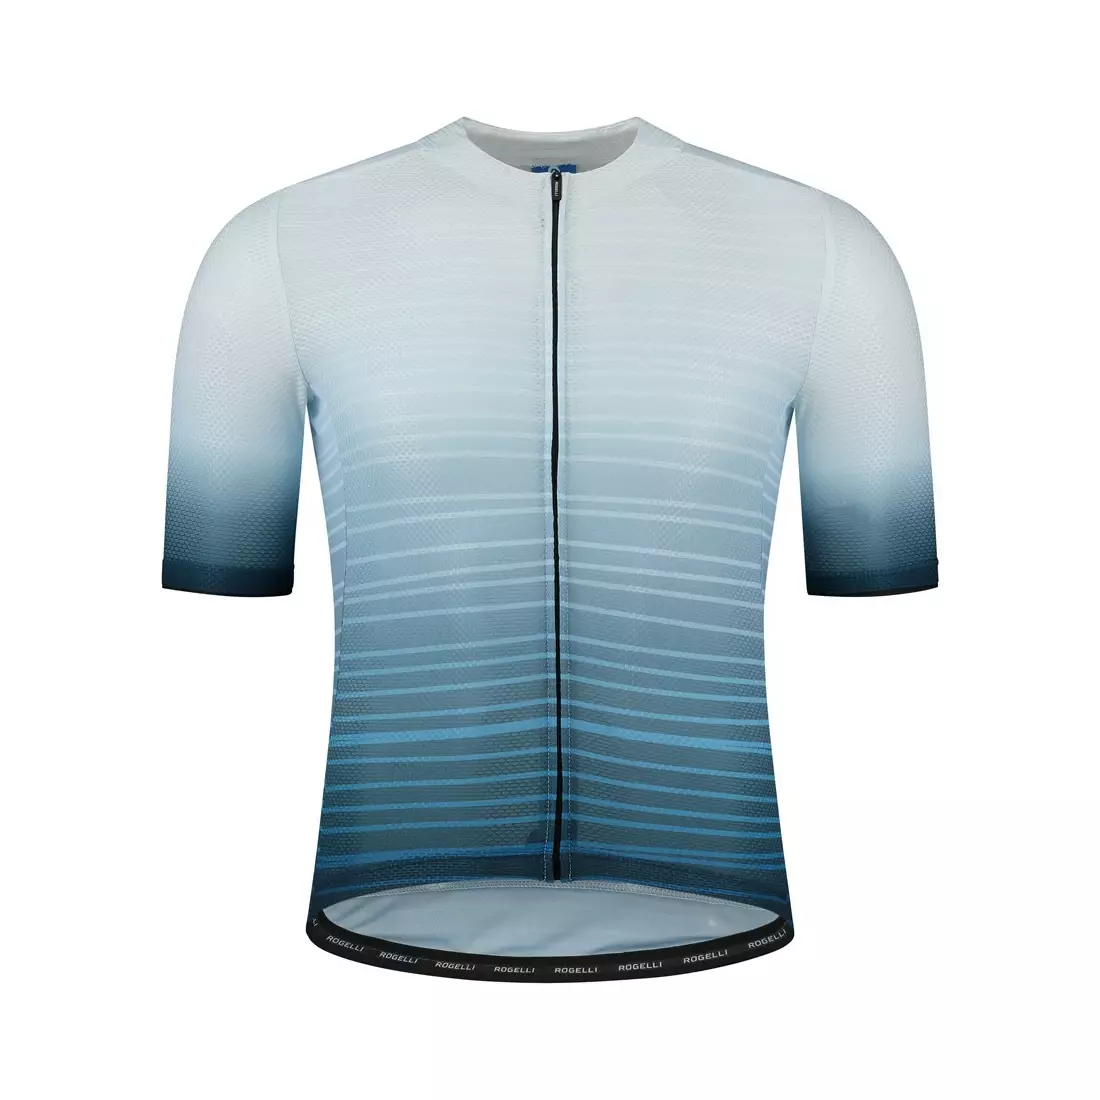 ROGELLI SURF pánské cyklistické tričko, Modrá bílá